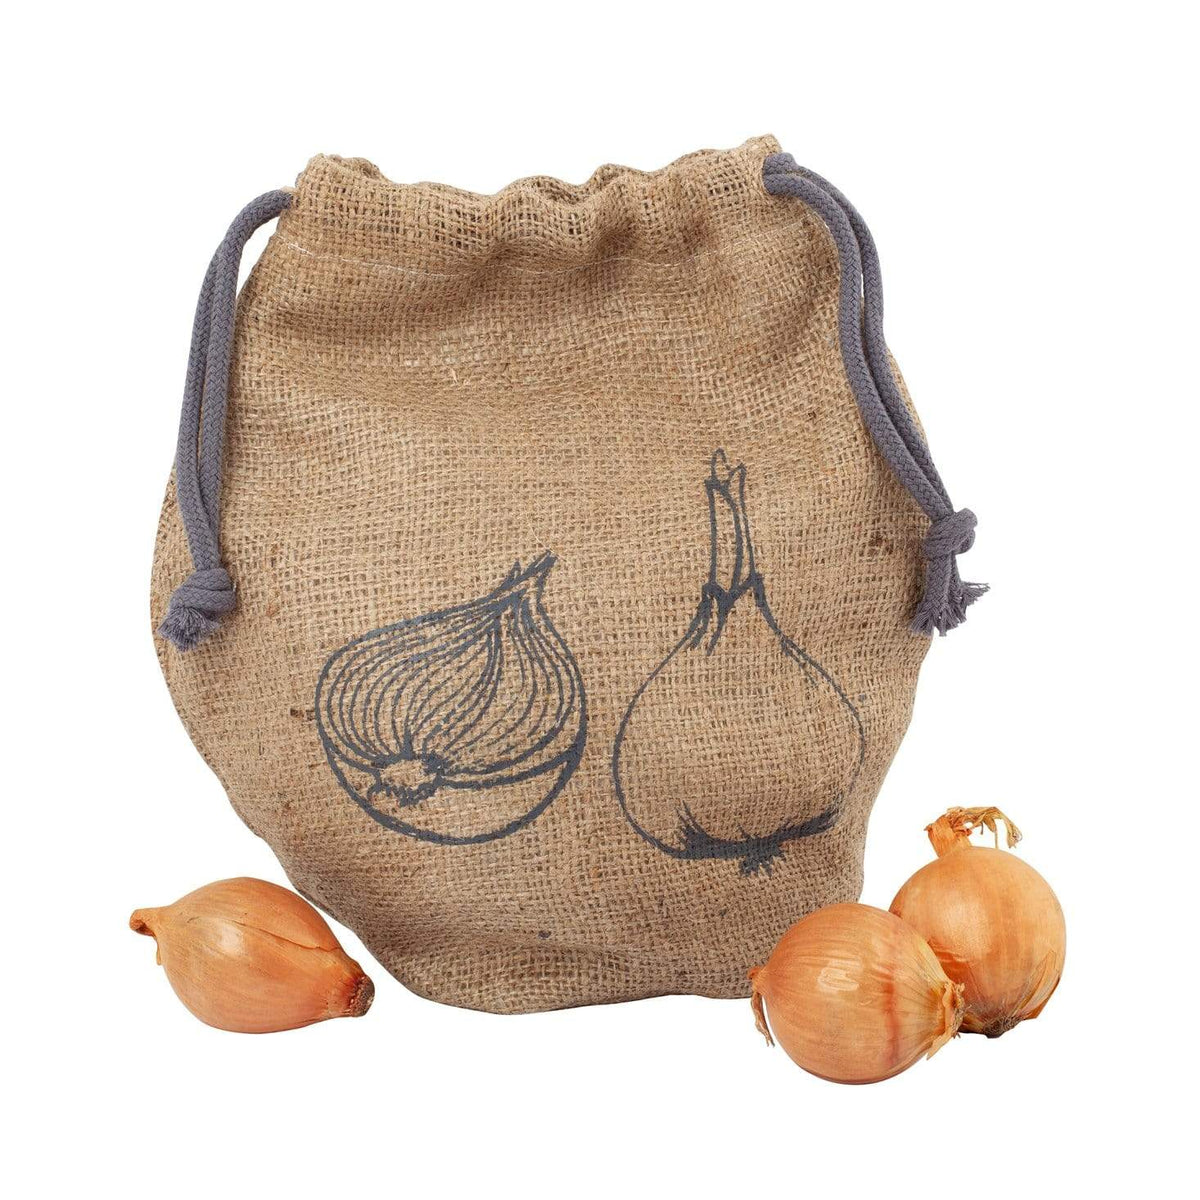 Redecker Onion Bag: Official Stockist